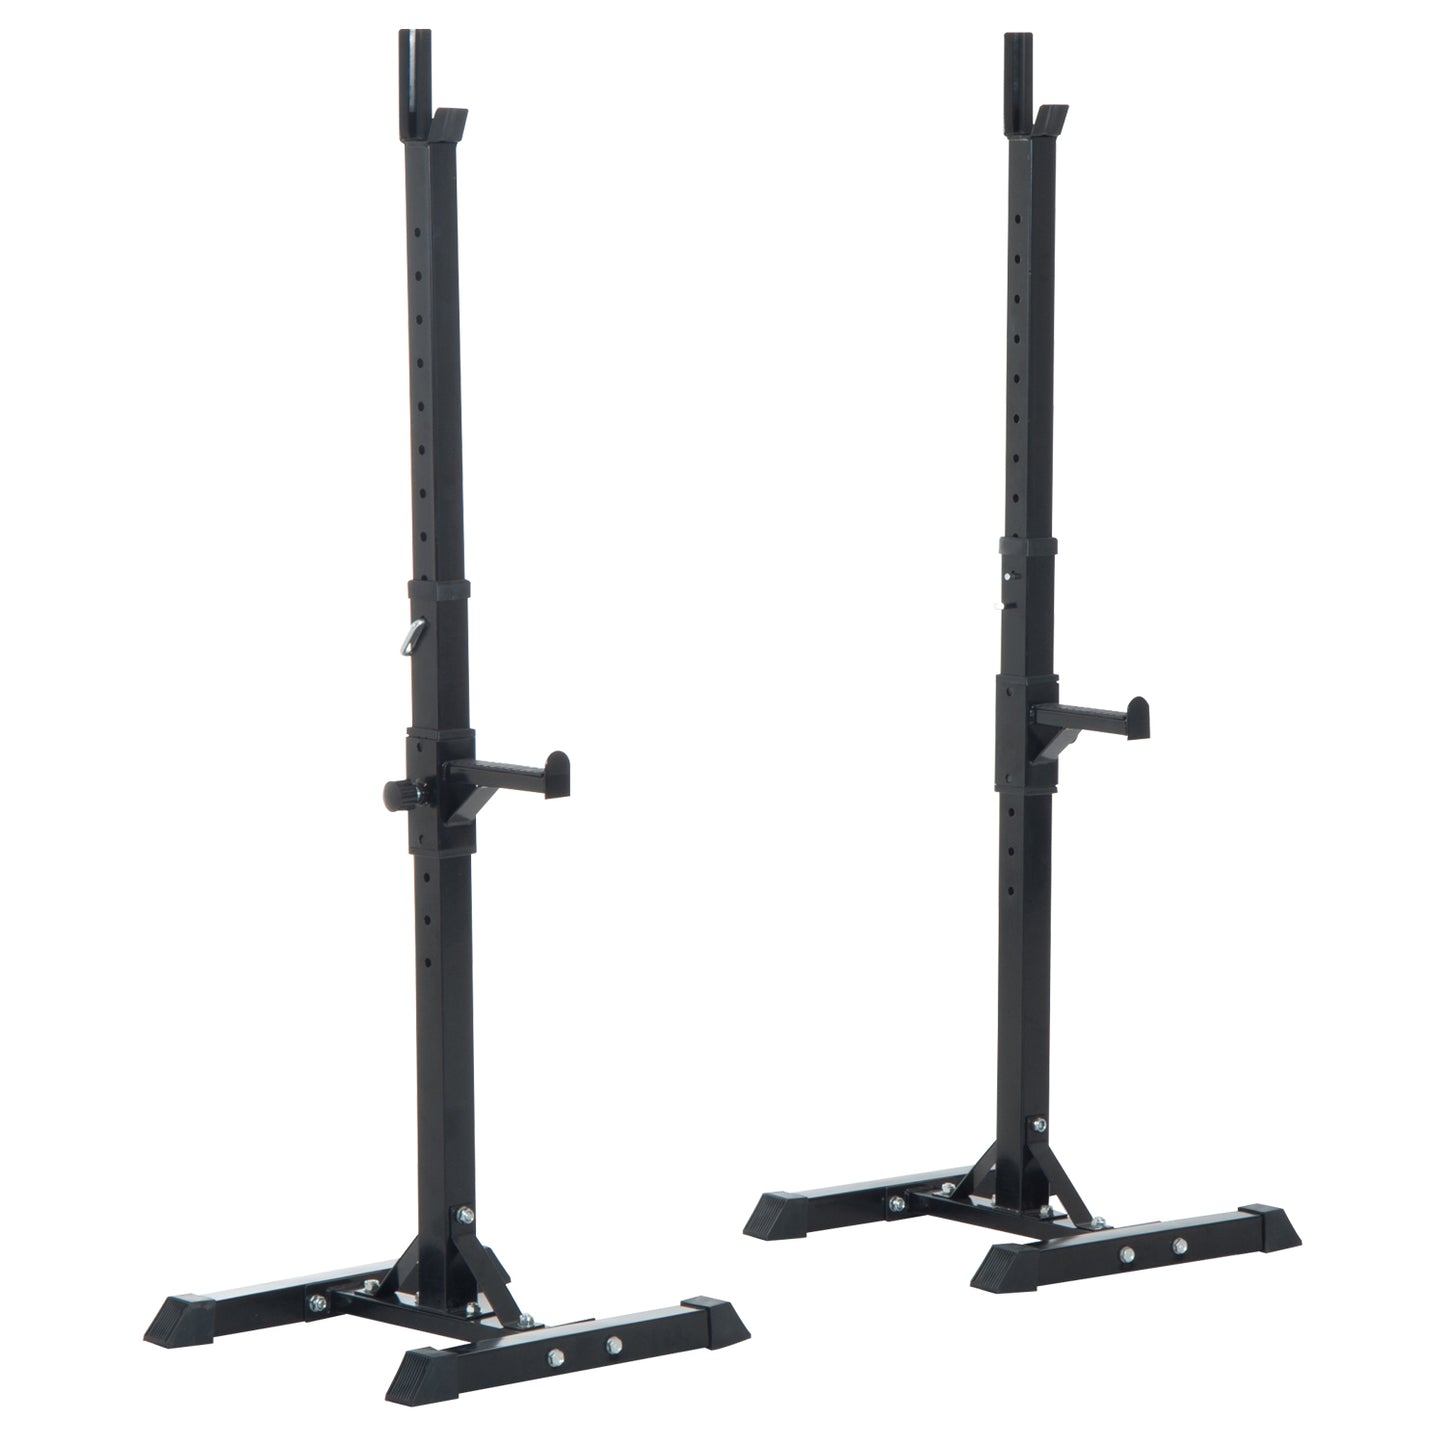 HOMCOM Adjustable Weights Barbell Squat Stand-Black